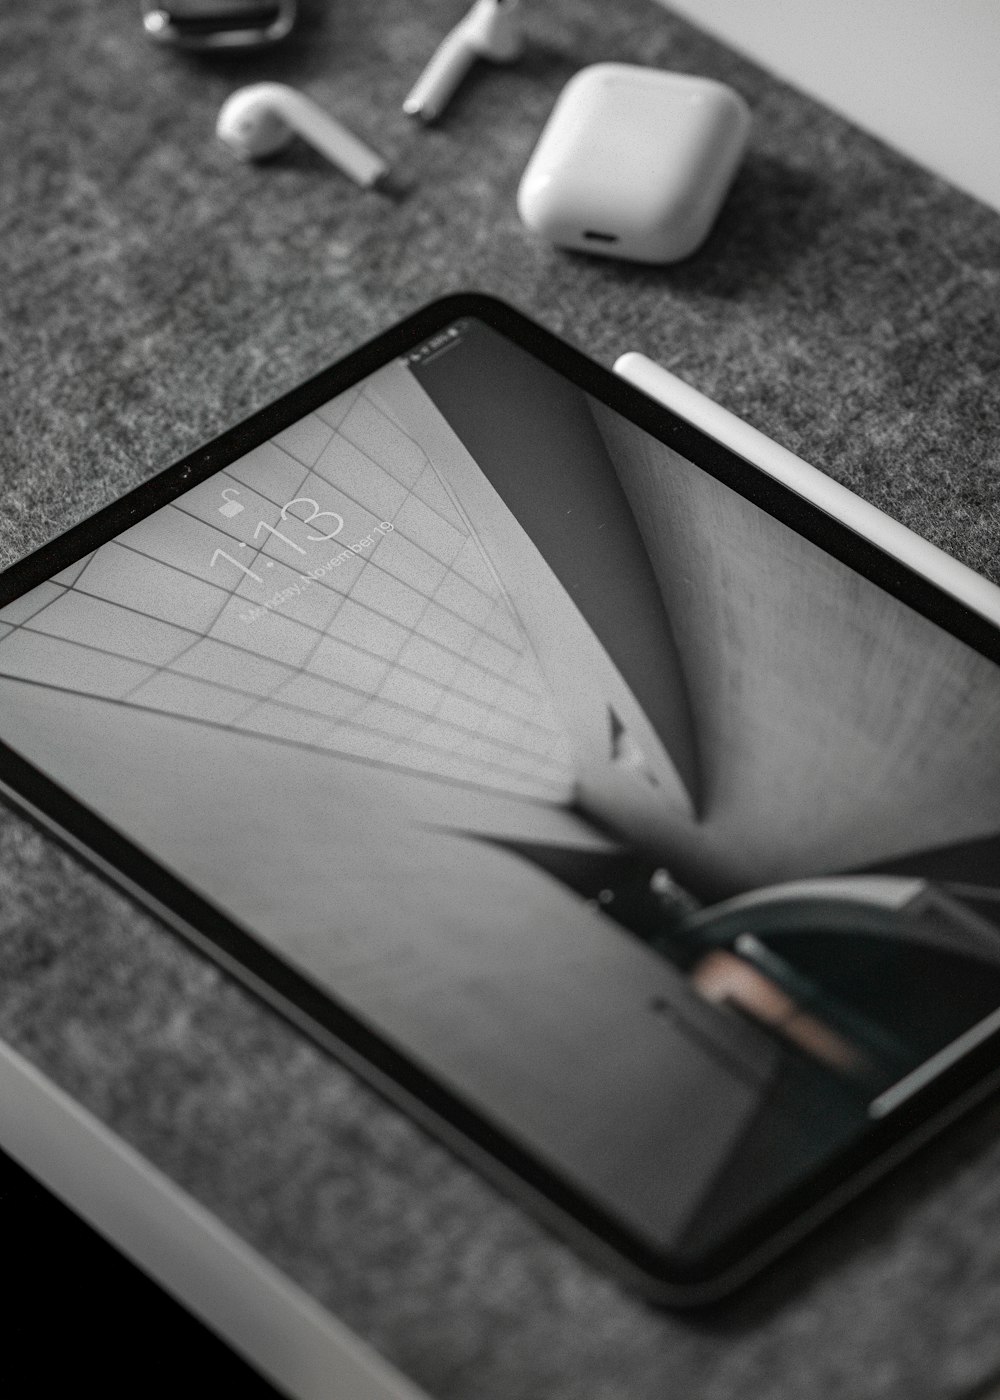 black iPad on gray surface